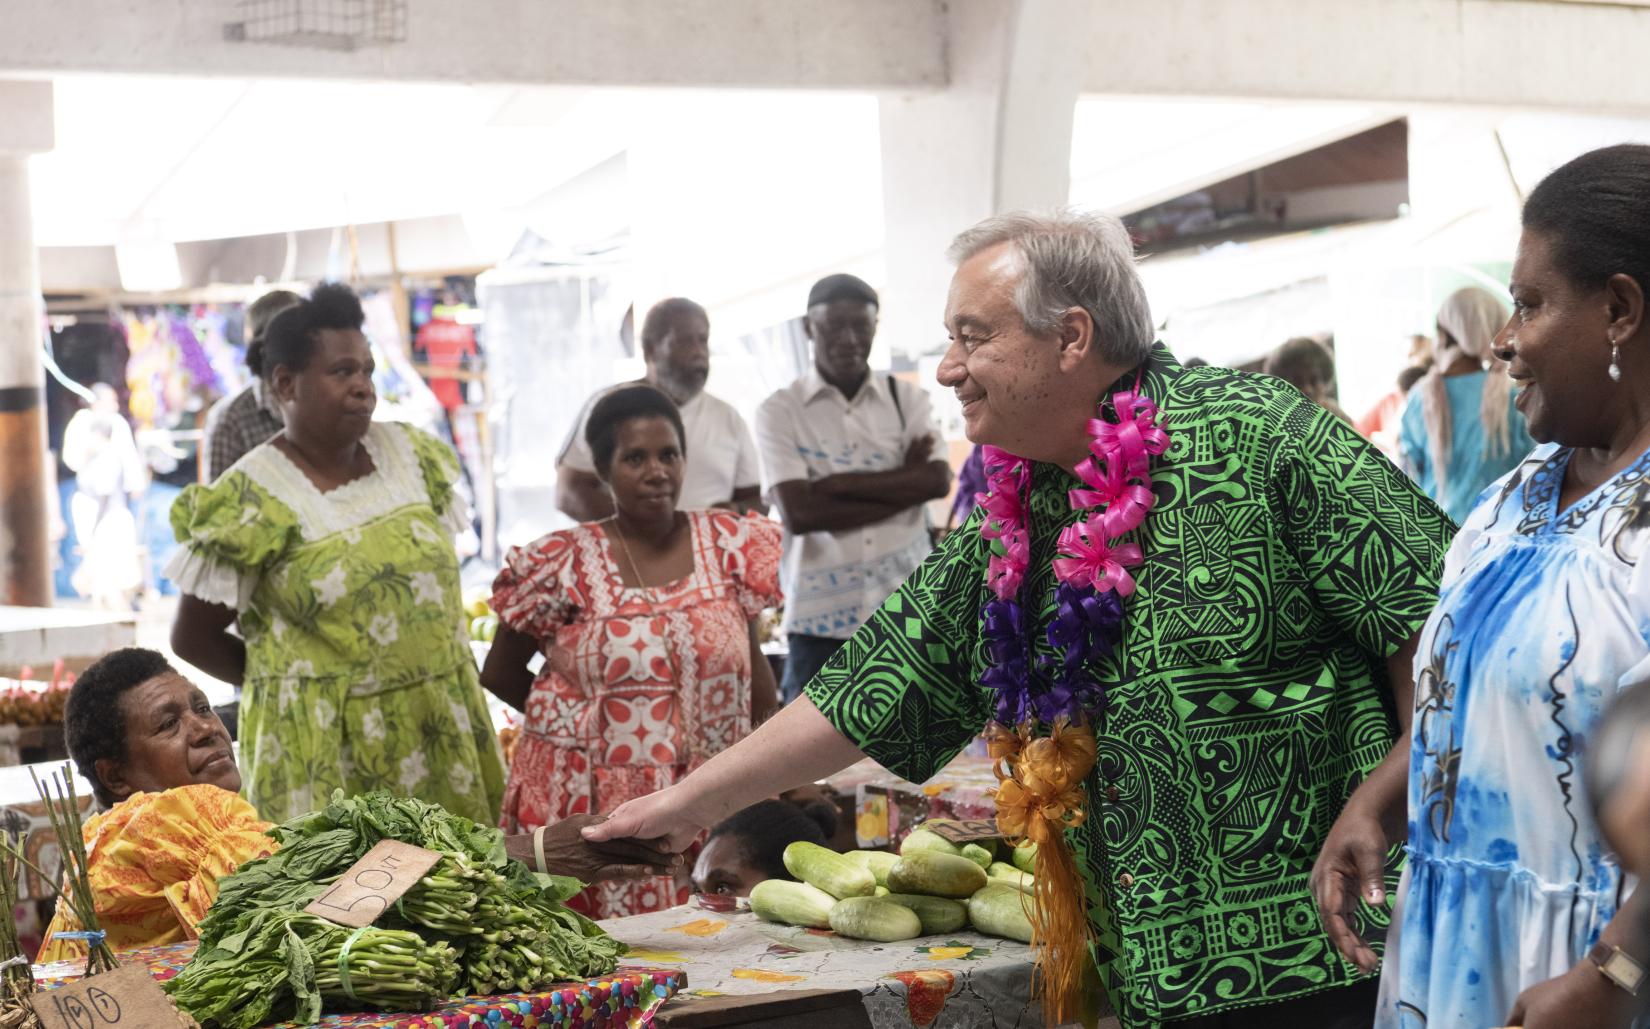 The Secretary Antonio Guterres with Women Market Vendors in Port Vila, Vanuatu